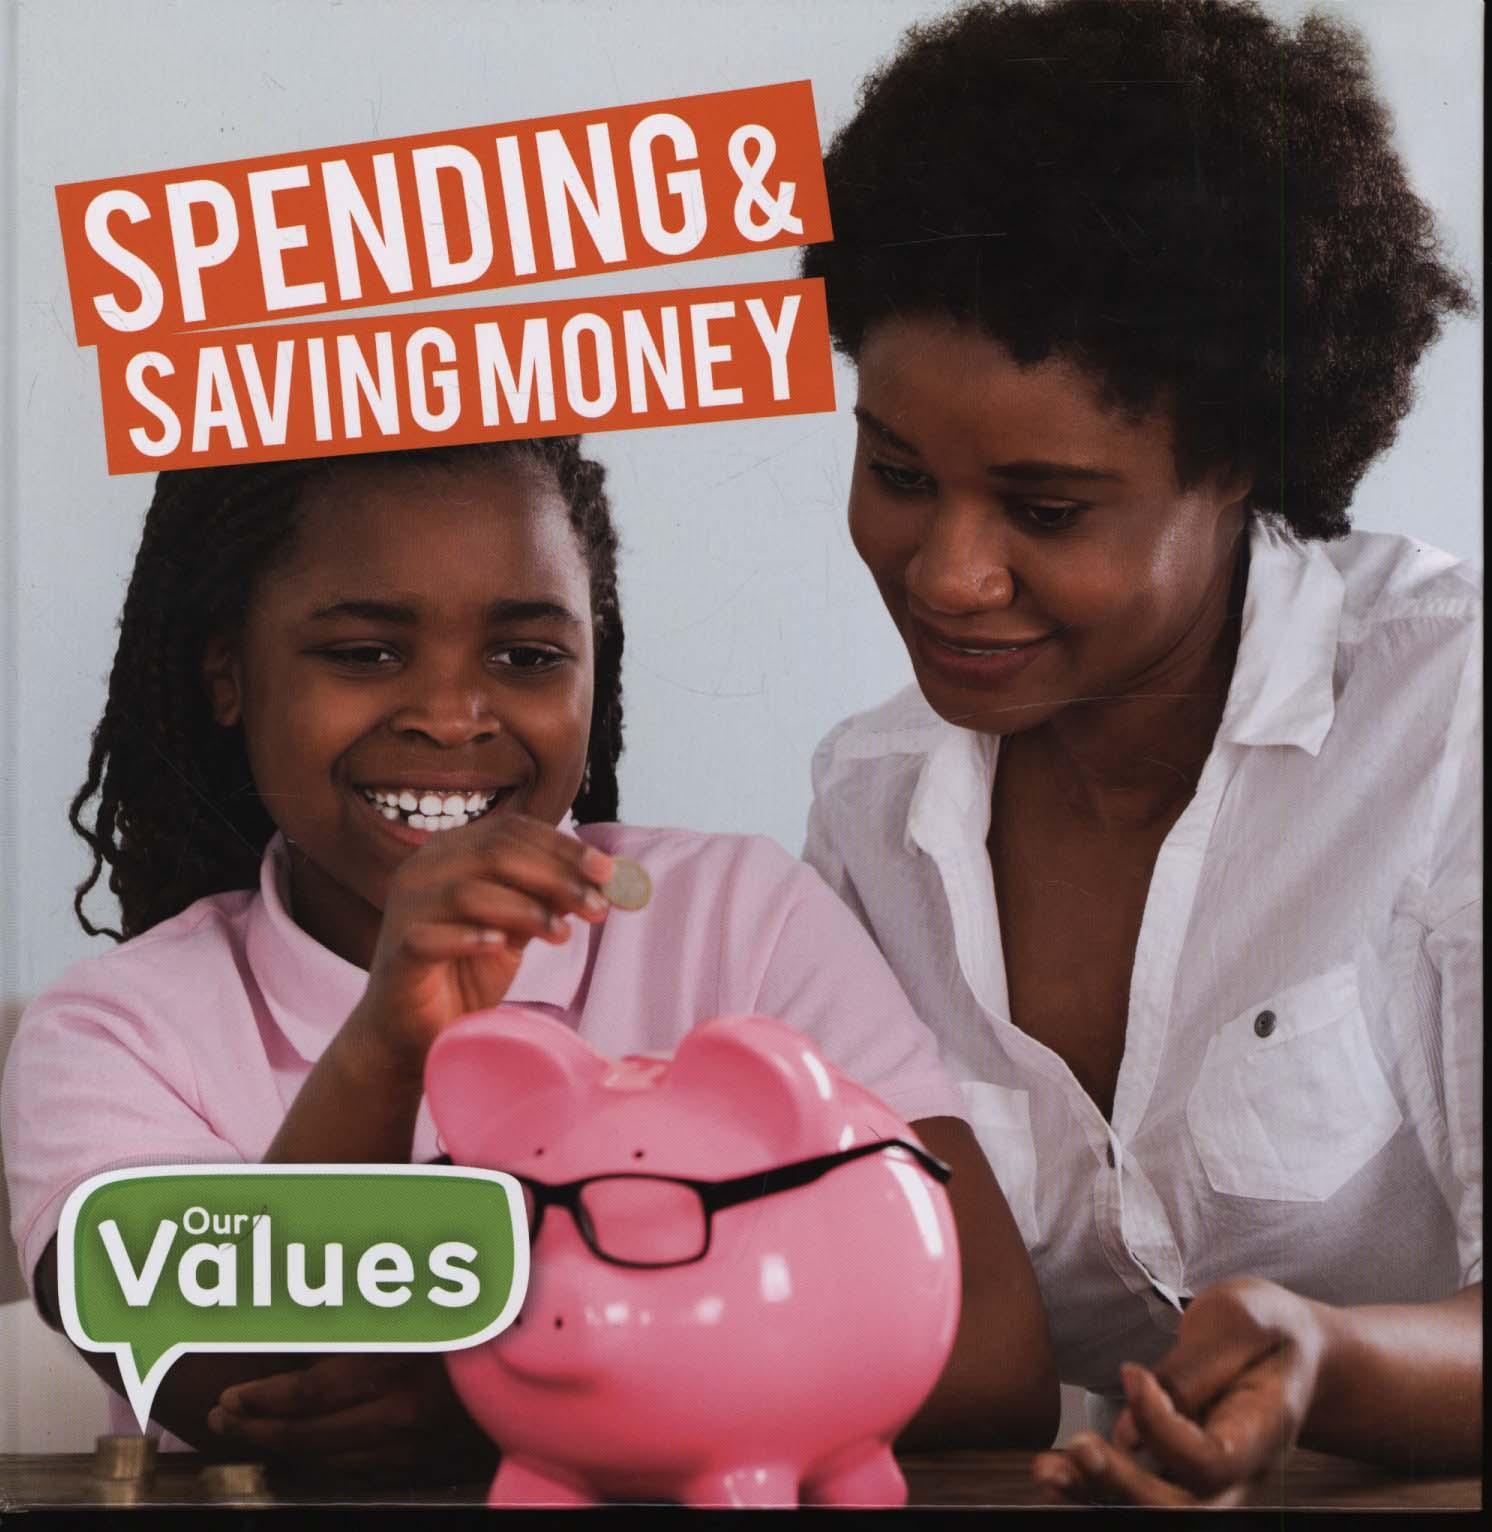 Spending & Saving Money